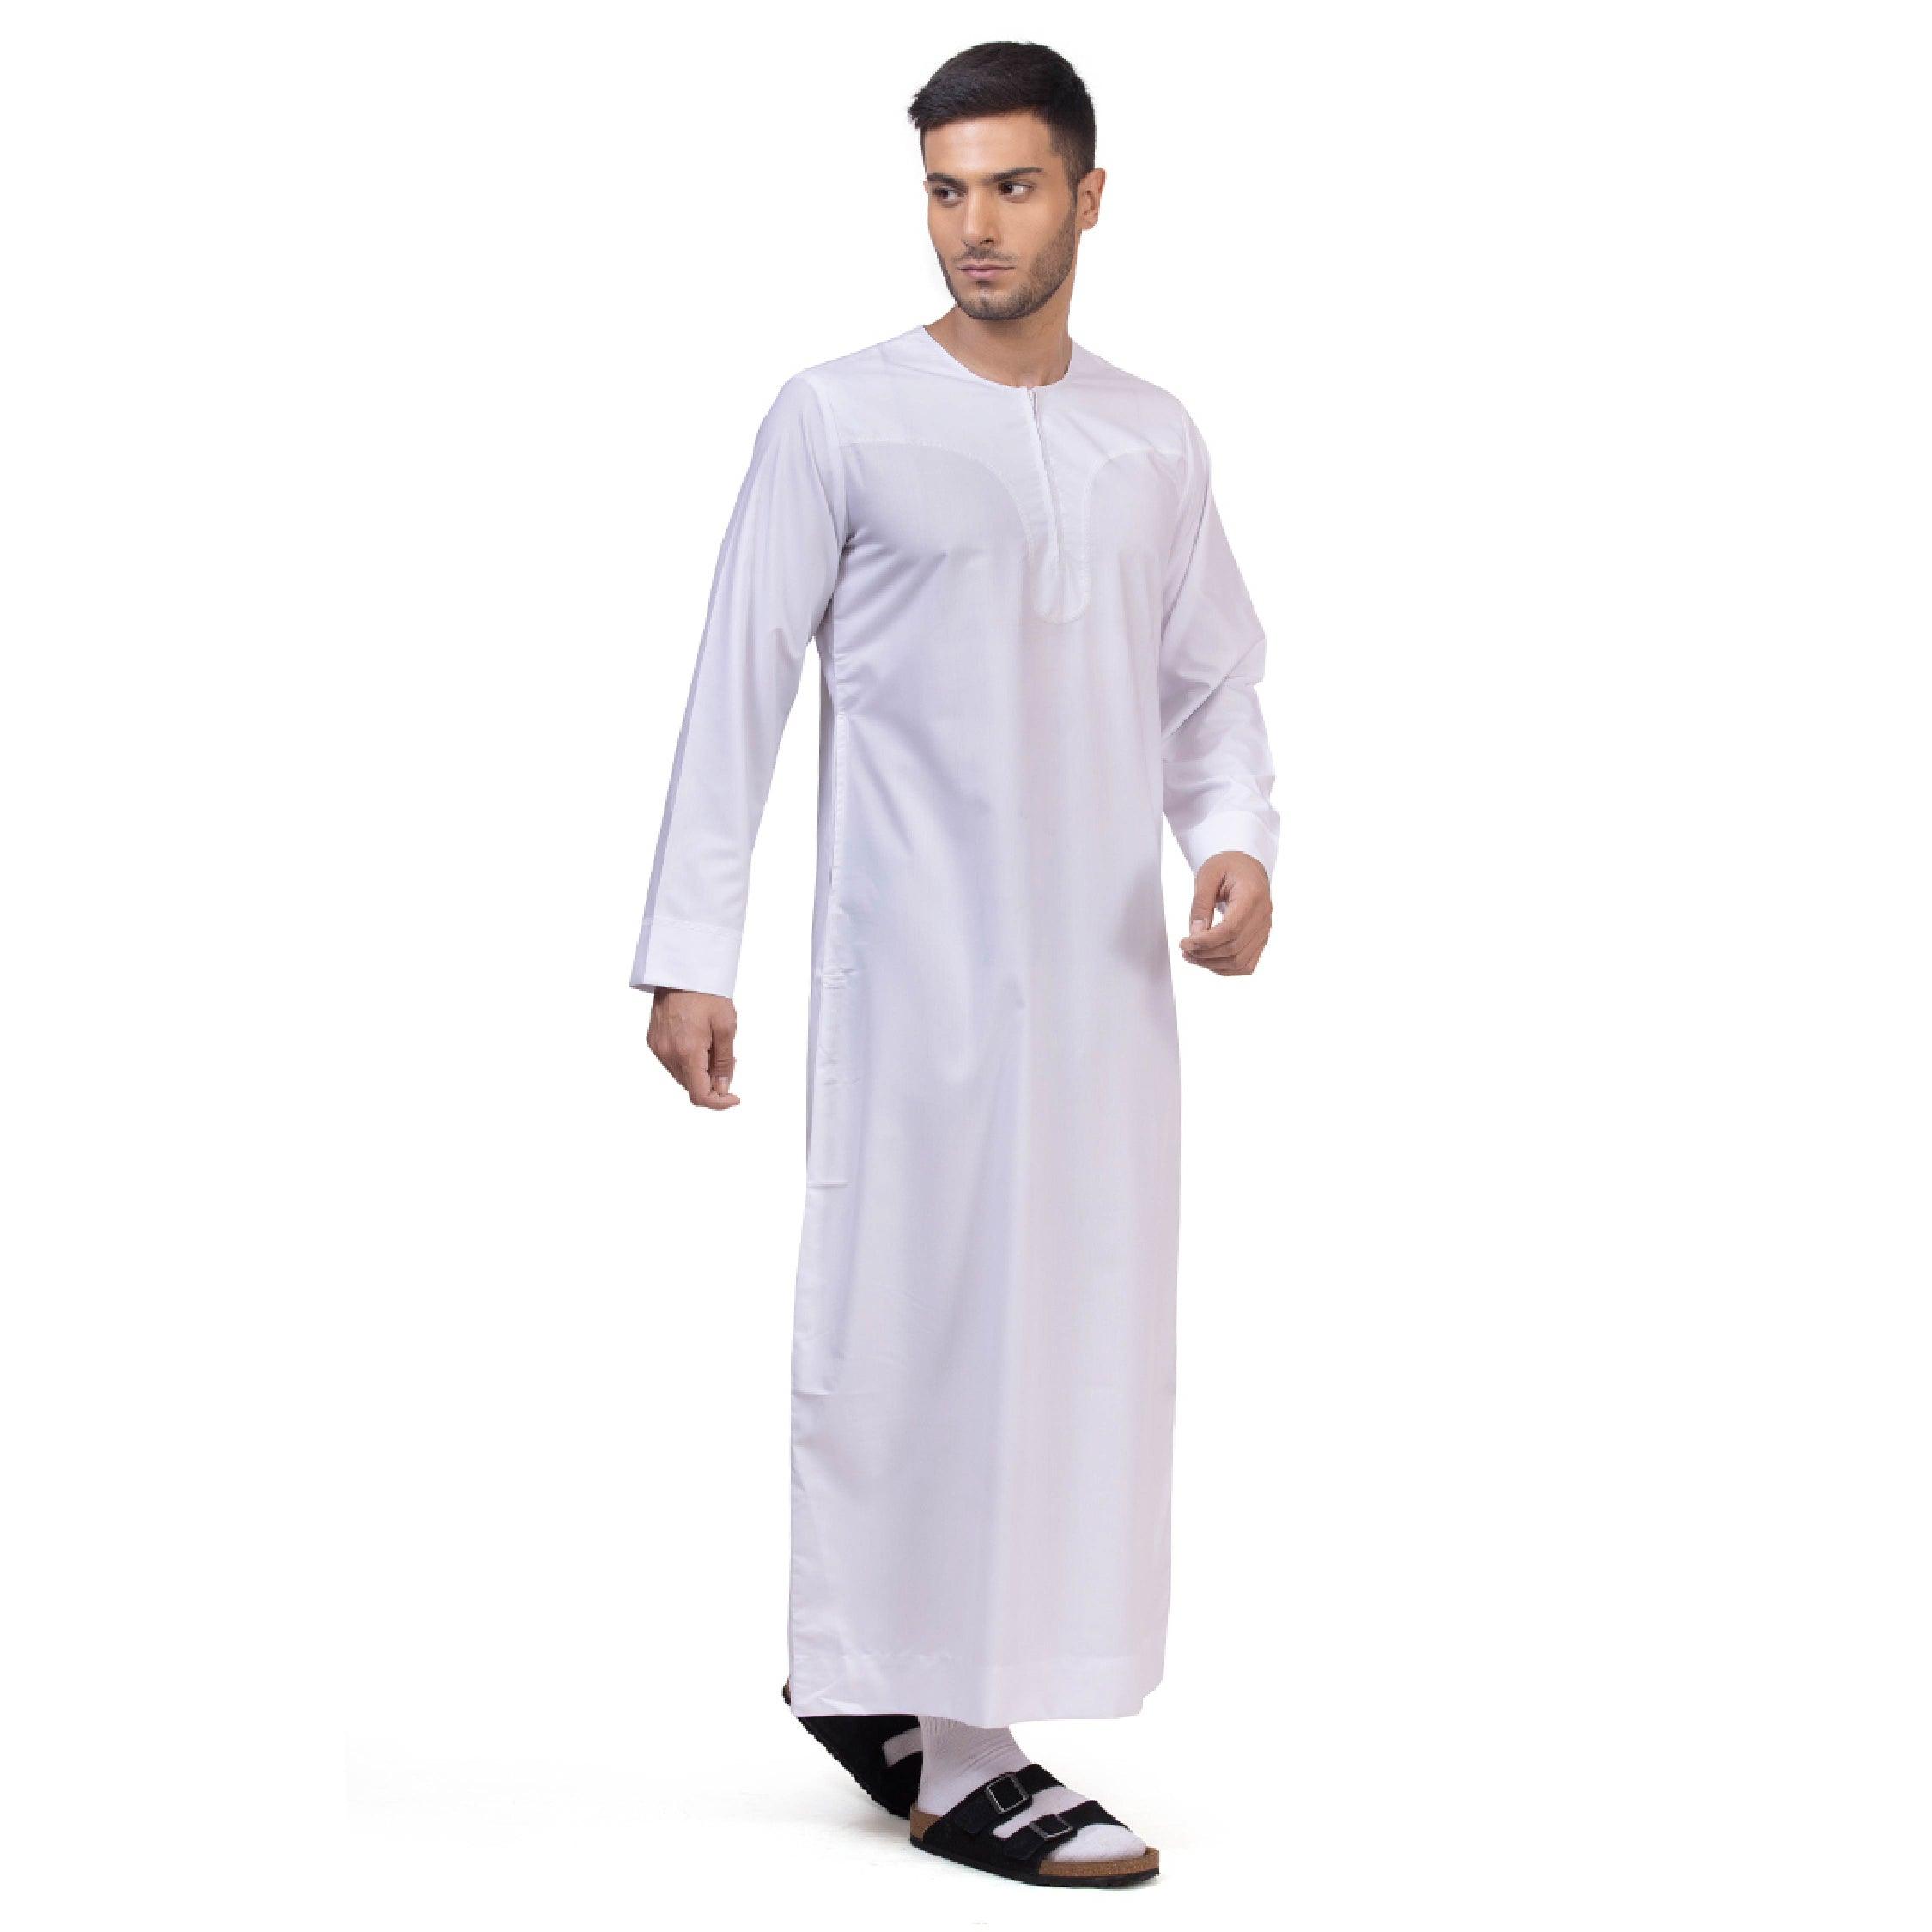 New White Aplos Omani Thobe for Men